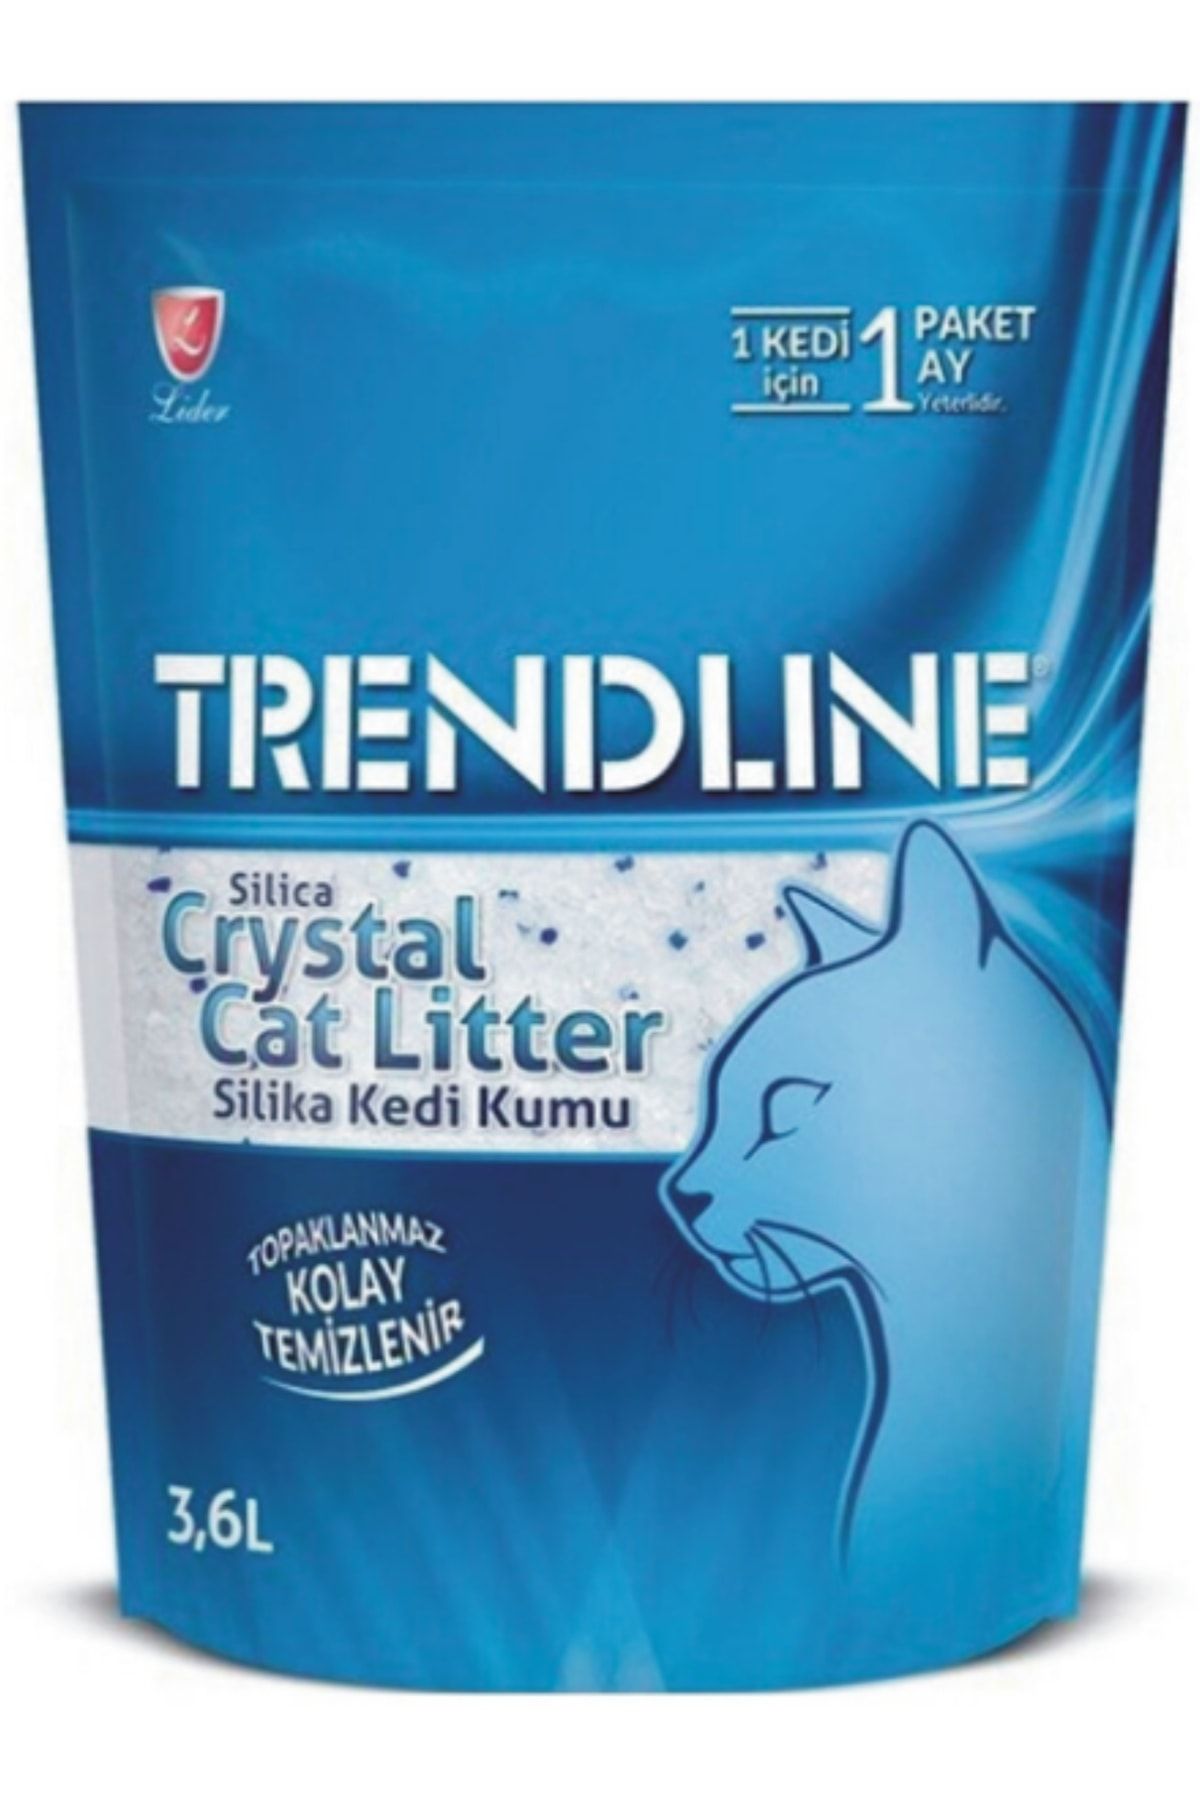 Trendline Silica Crystal Cat Litter Kedi Kumu 3,6 Litre